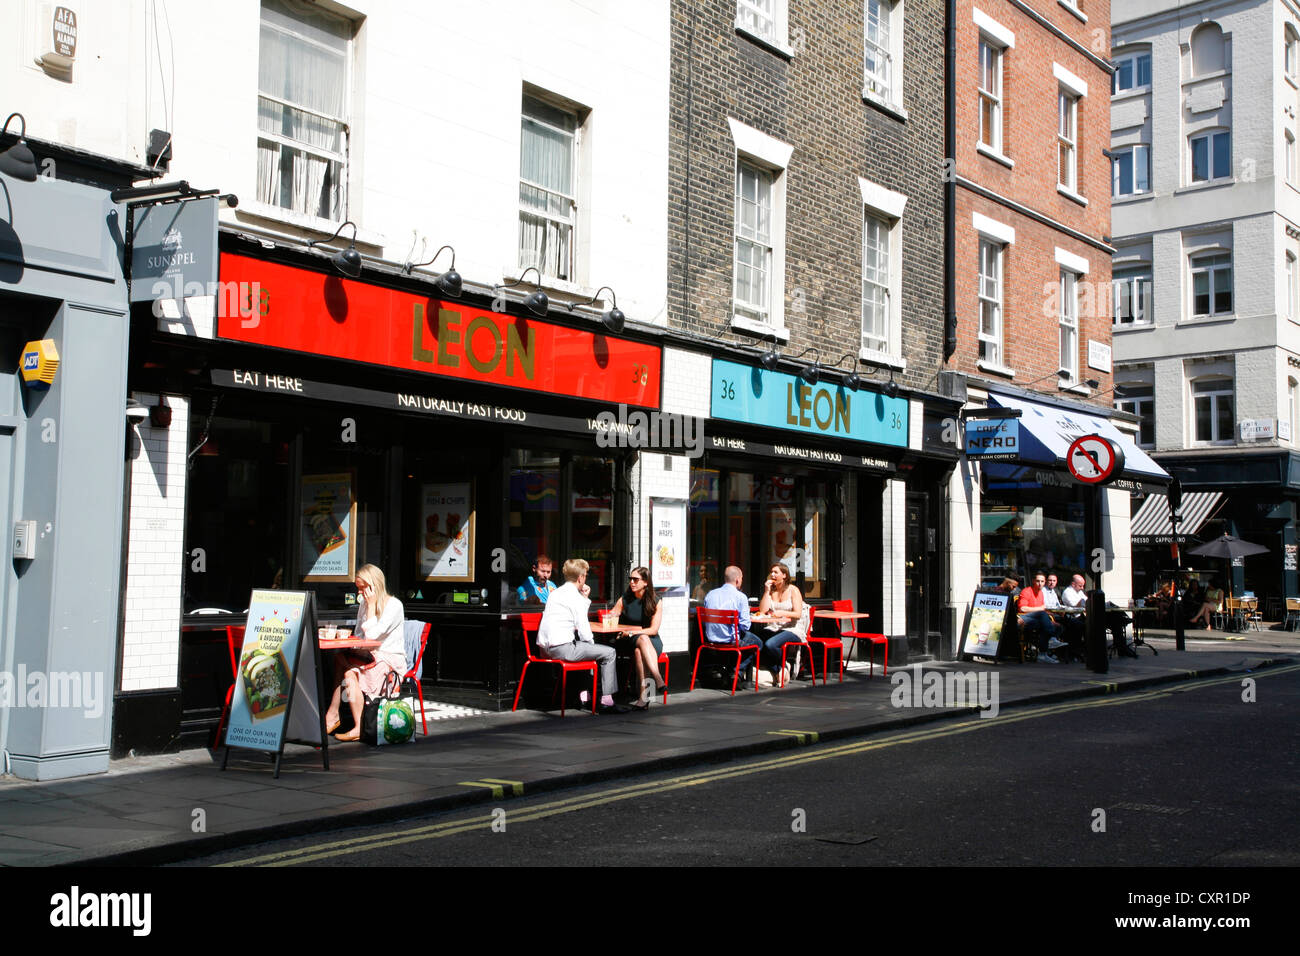 Leon and Caffe Nero coffee shops on Old Compton Street, Soho, London, UK Stock Photo